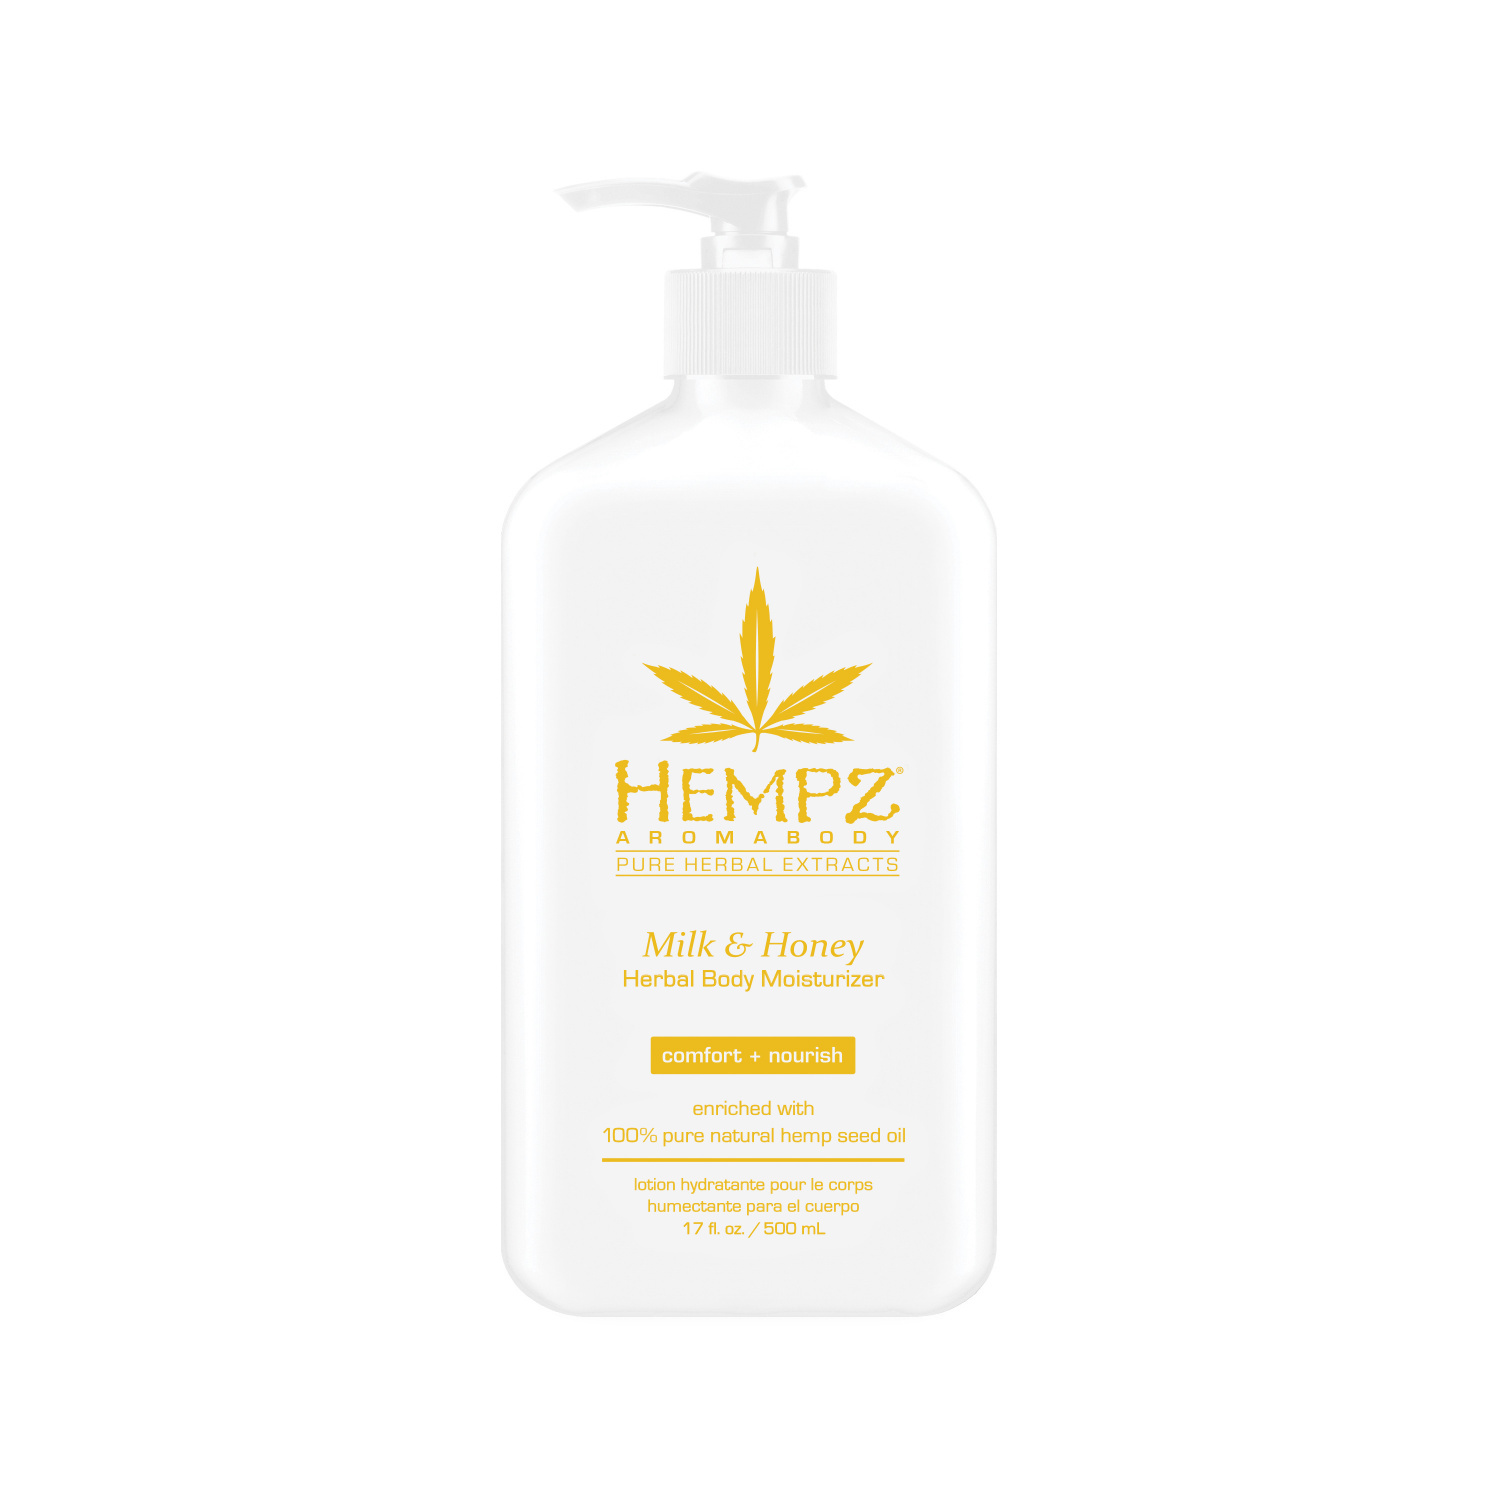 Hempz Aromabody MIlk & Honey Herbal Body Moisturizer (500 ml), фото 1